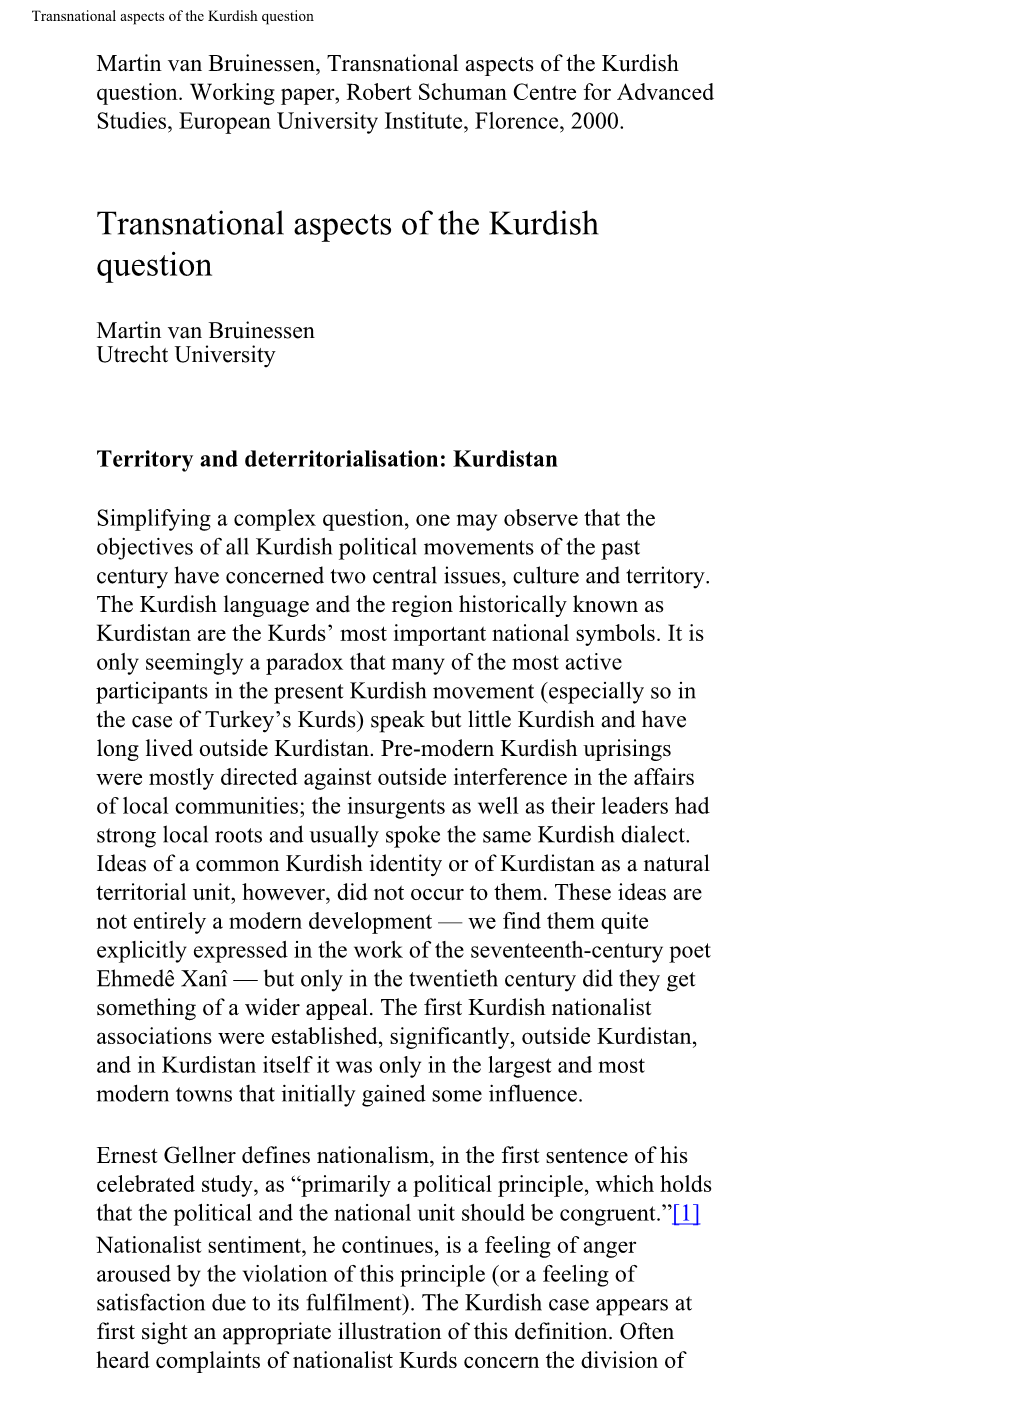 Transnational Aspects of the Kurdish Question